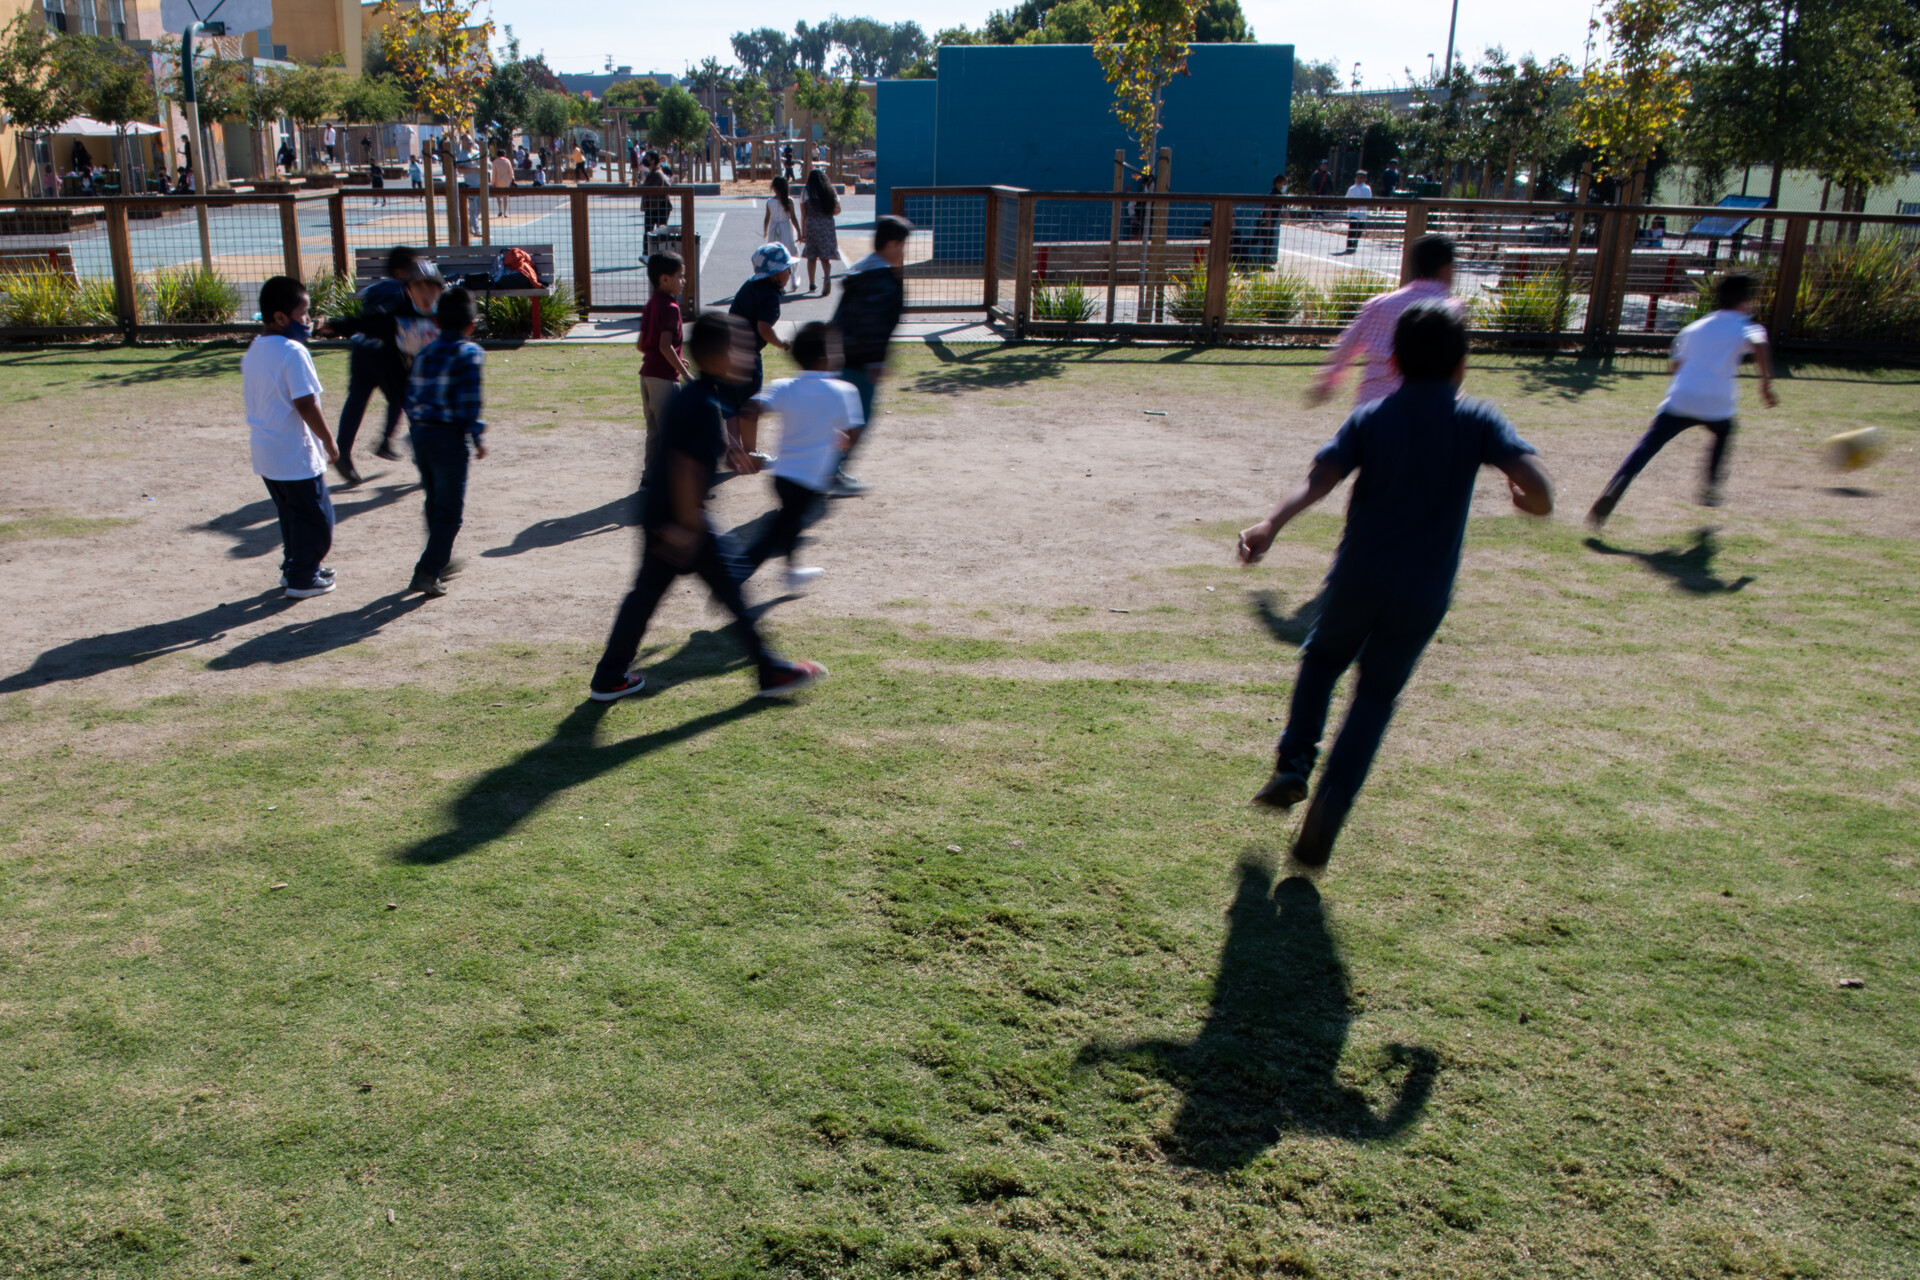 Children running after a soccer ball on a grassy school yard.